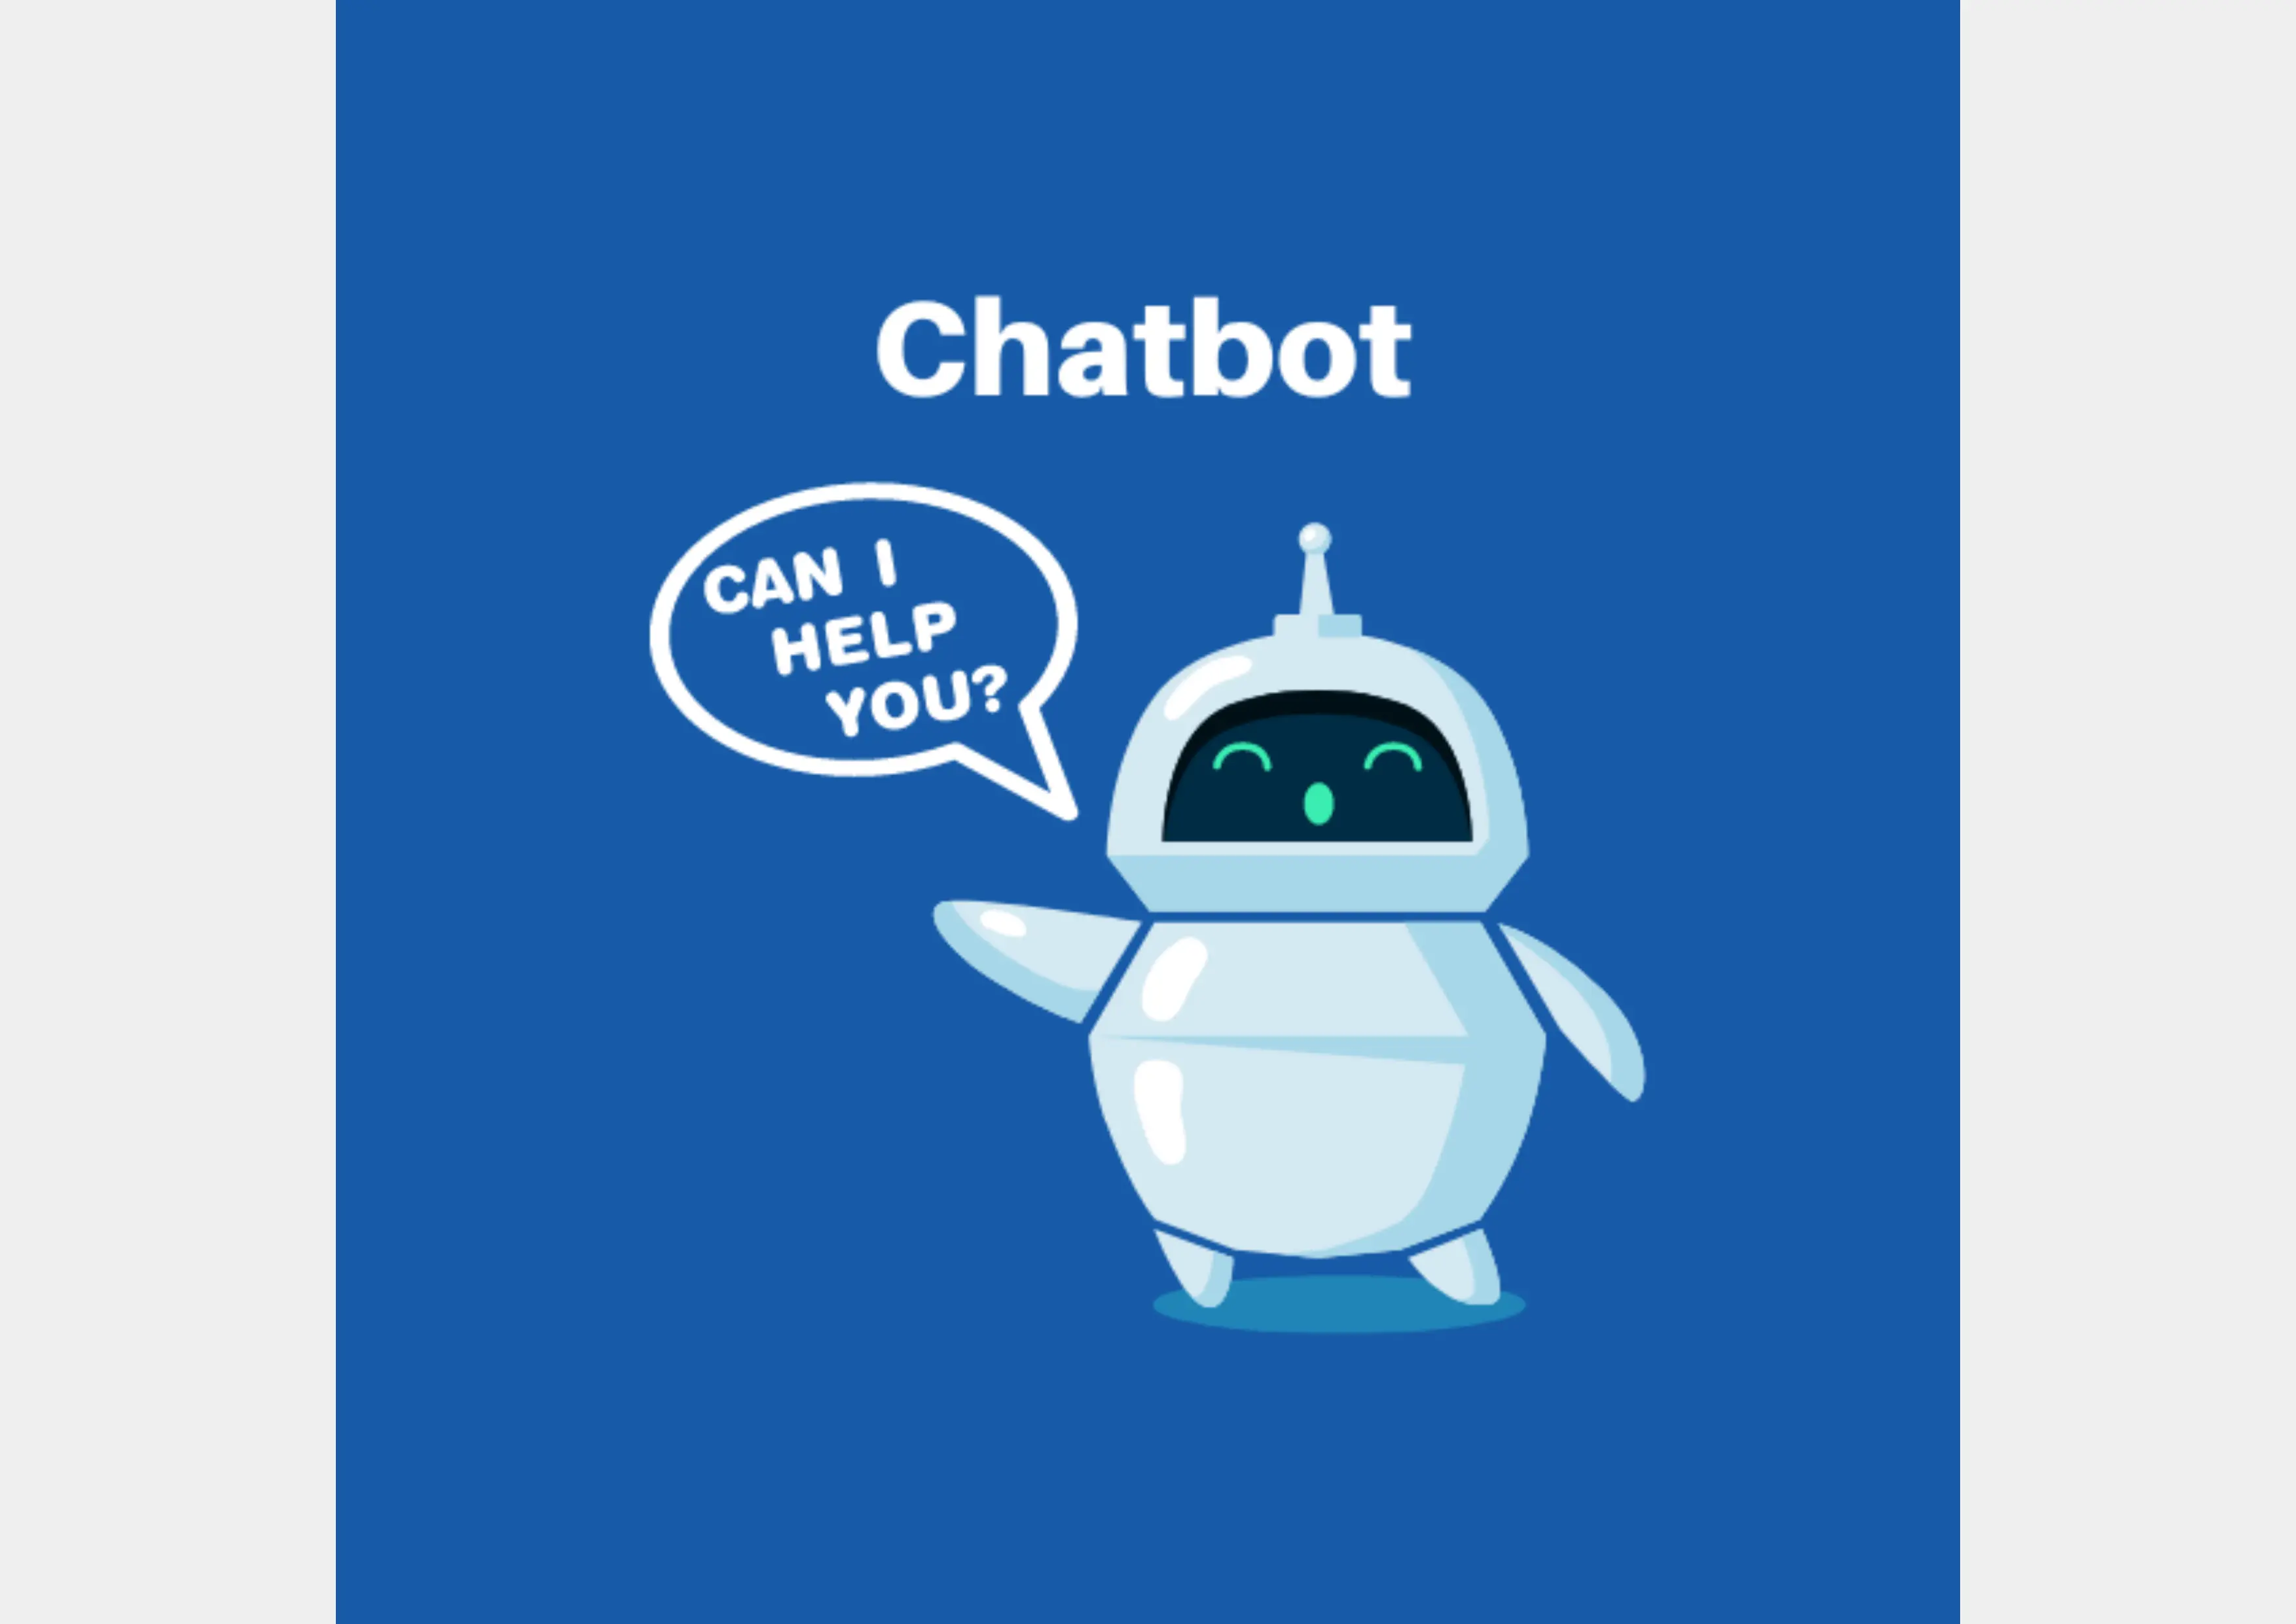 Plotly Dash + LangChain: Chatbot App Template